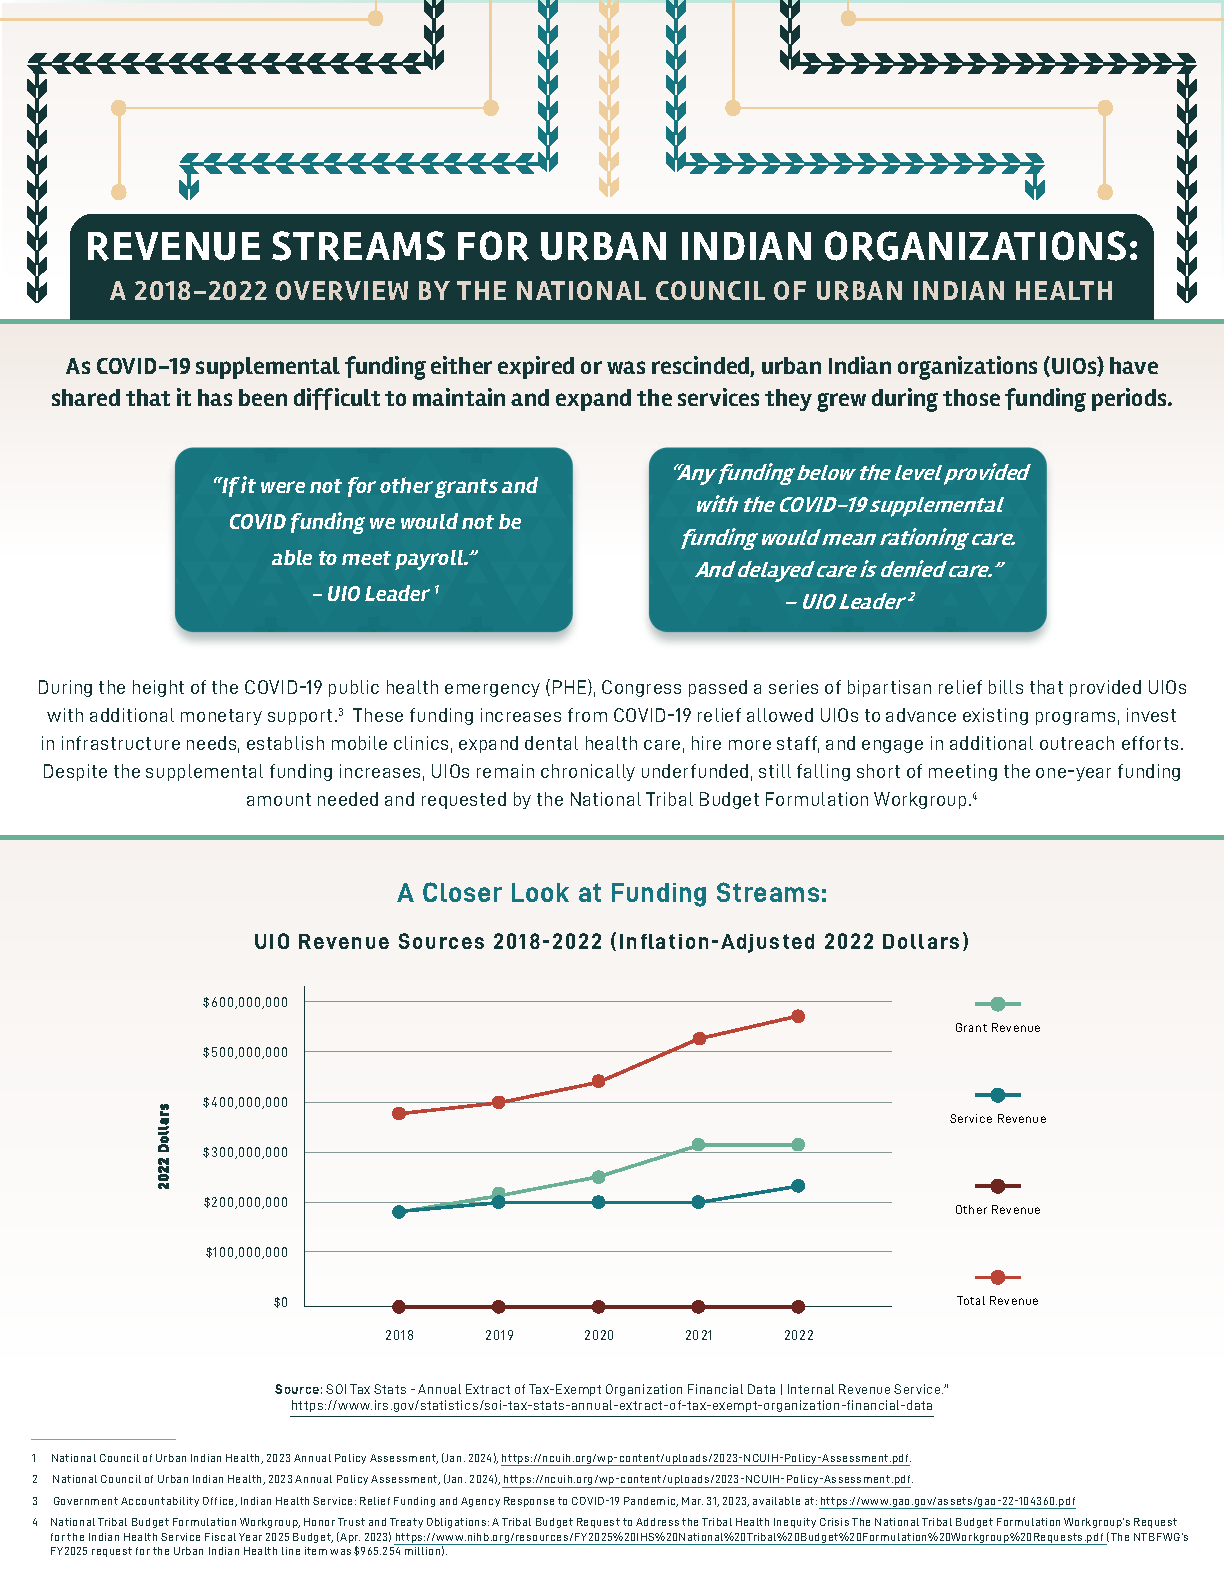 Revenue Streams for Urban Indian Organizations